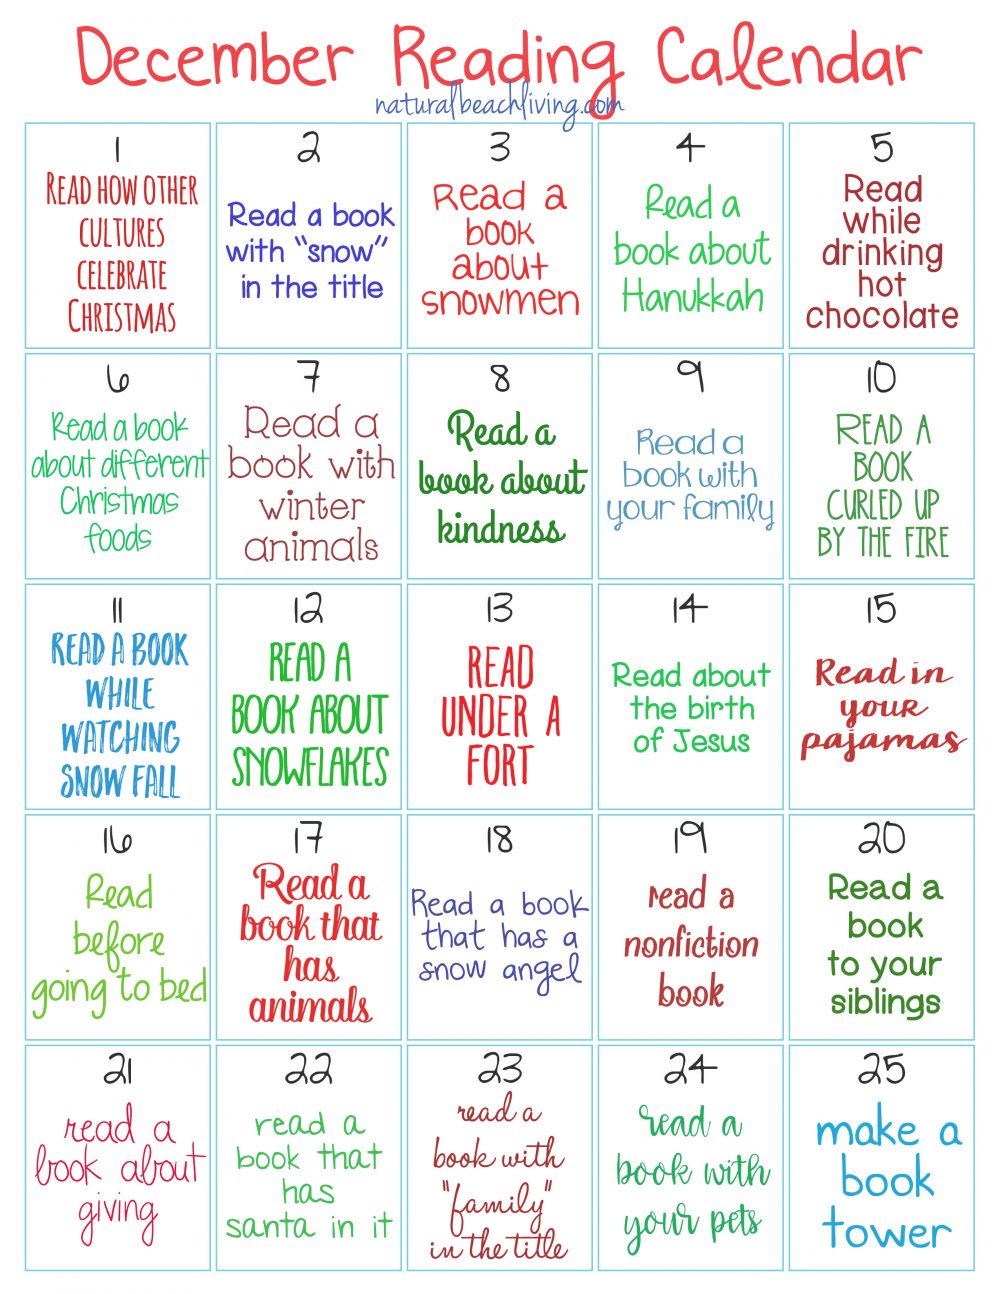 Christmas Reading Challenge for Kids